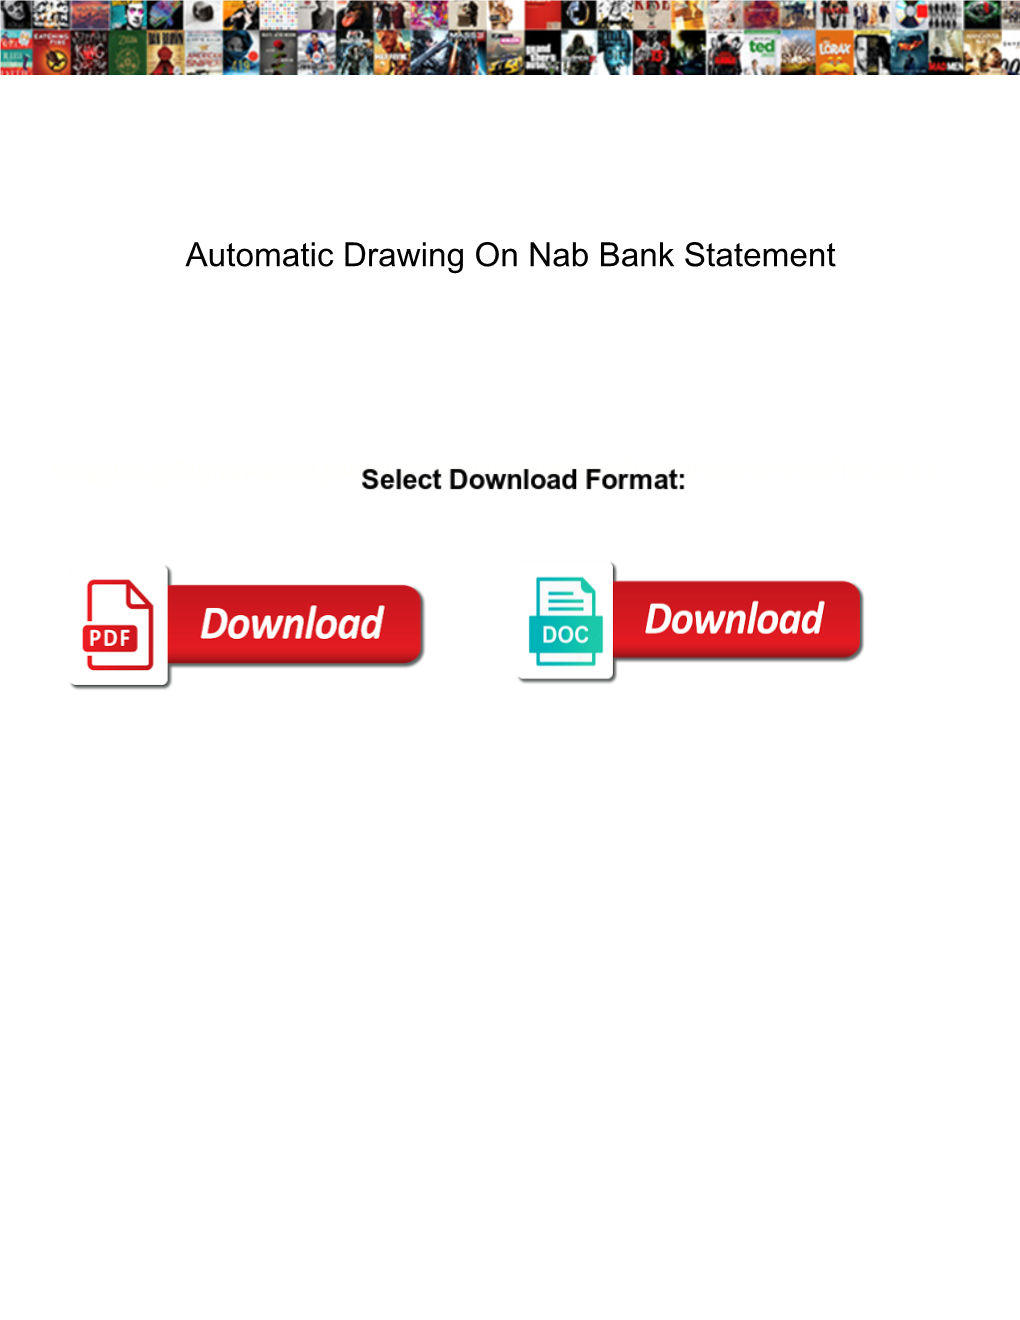 Automatic Drawing on Nab Bank Statement